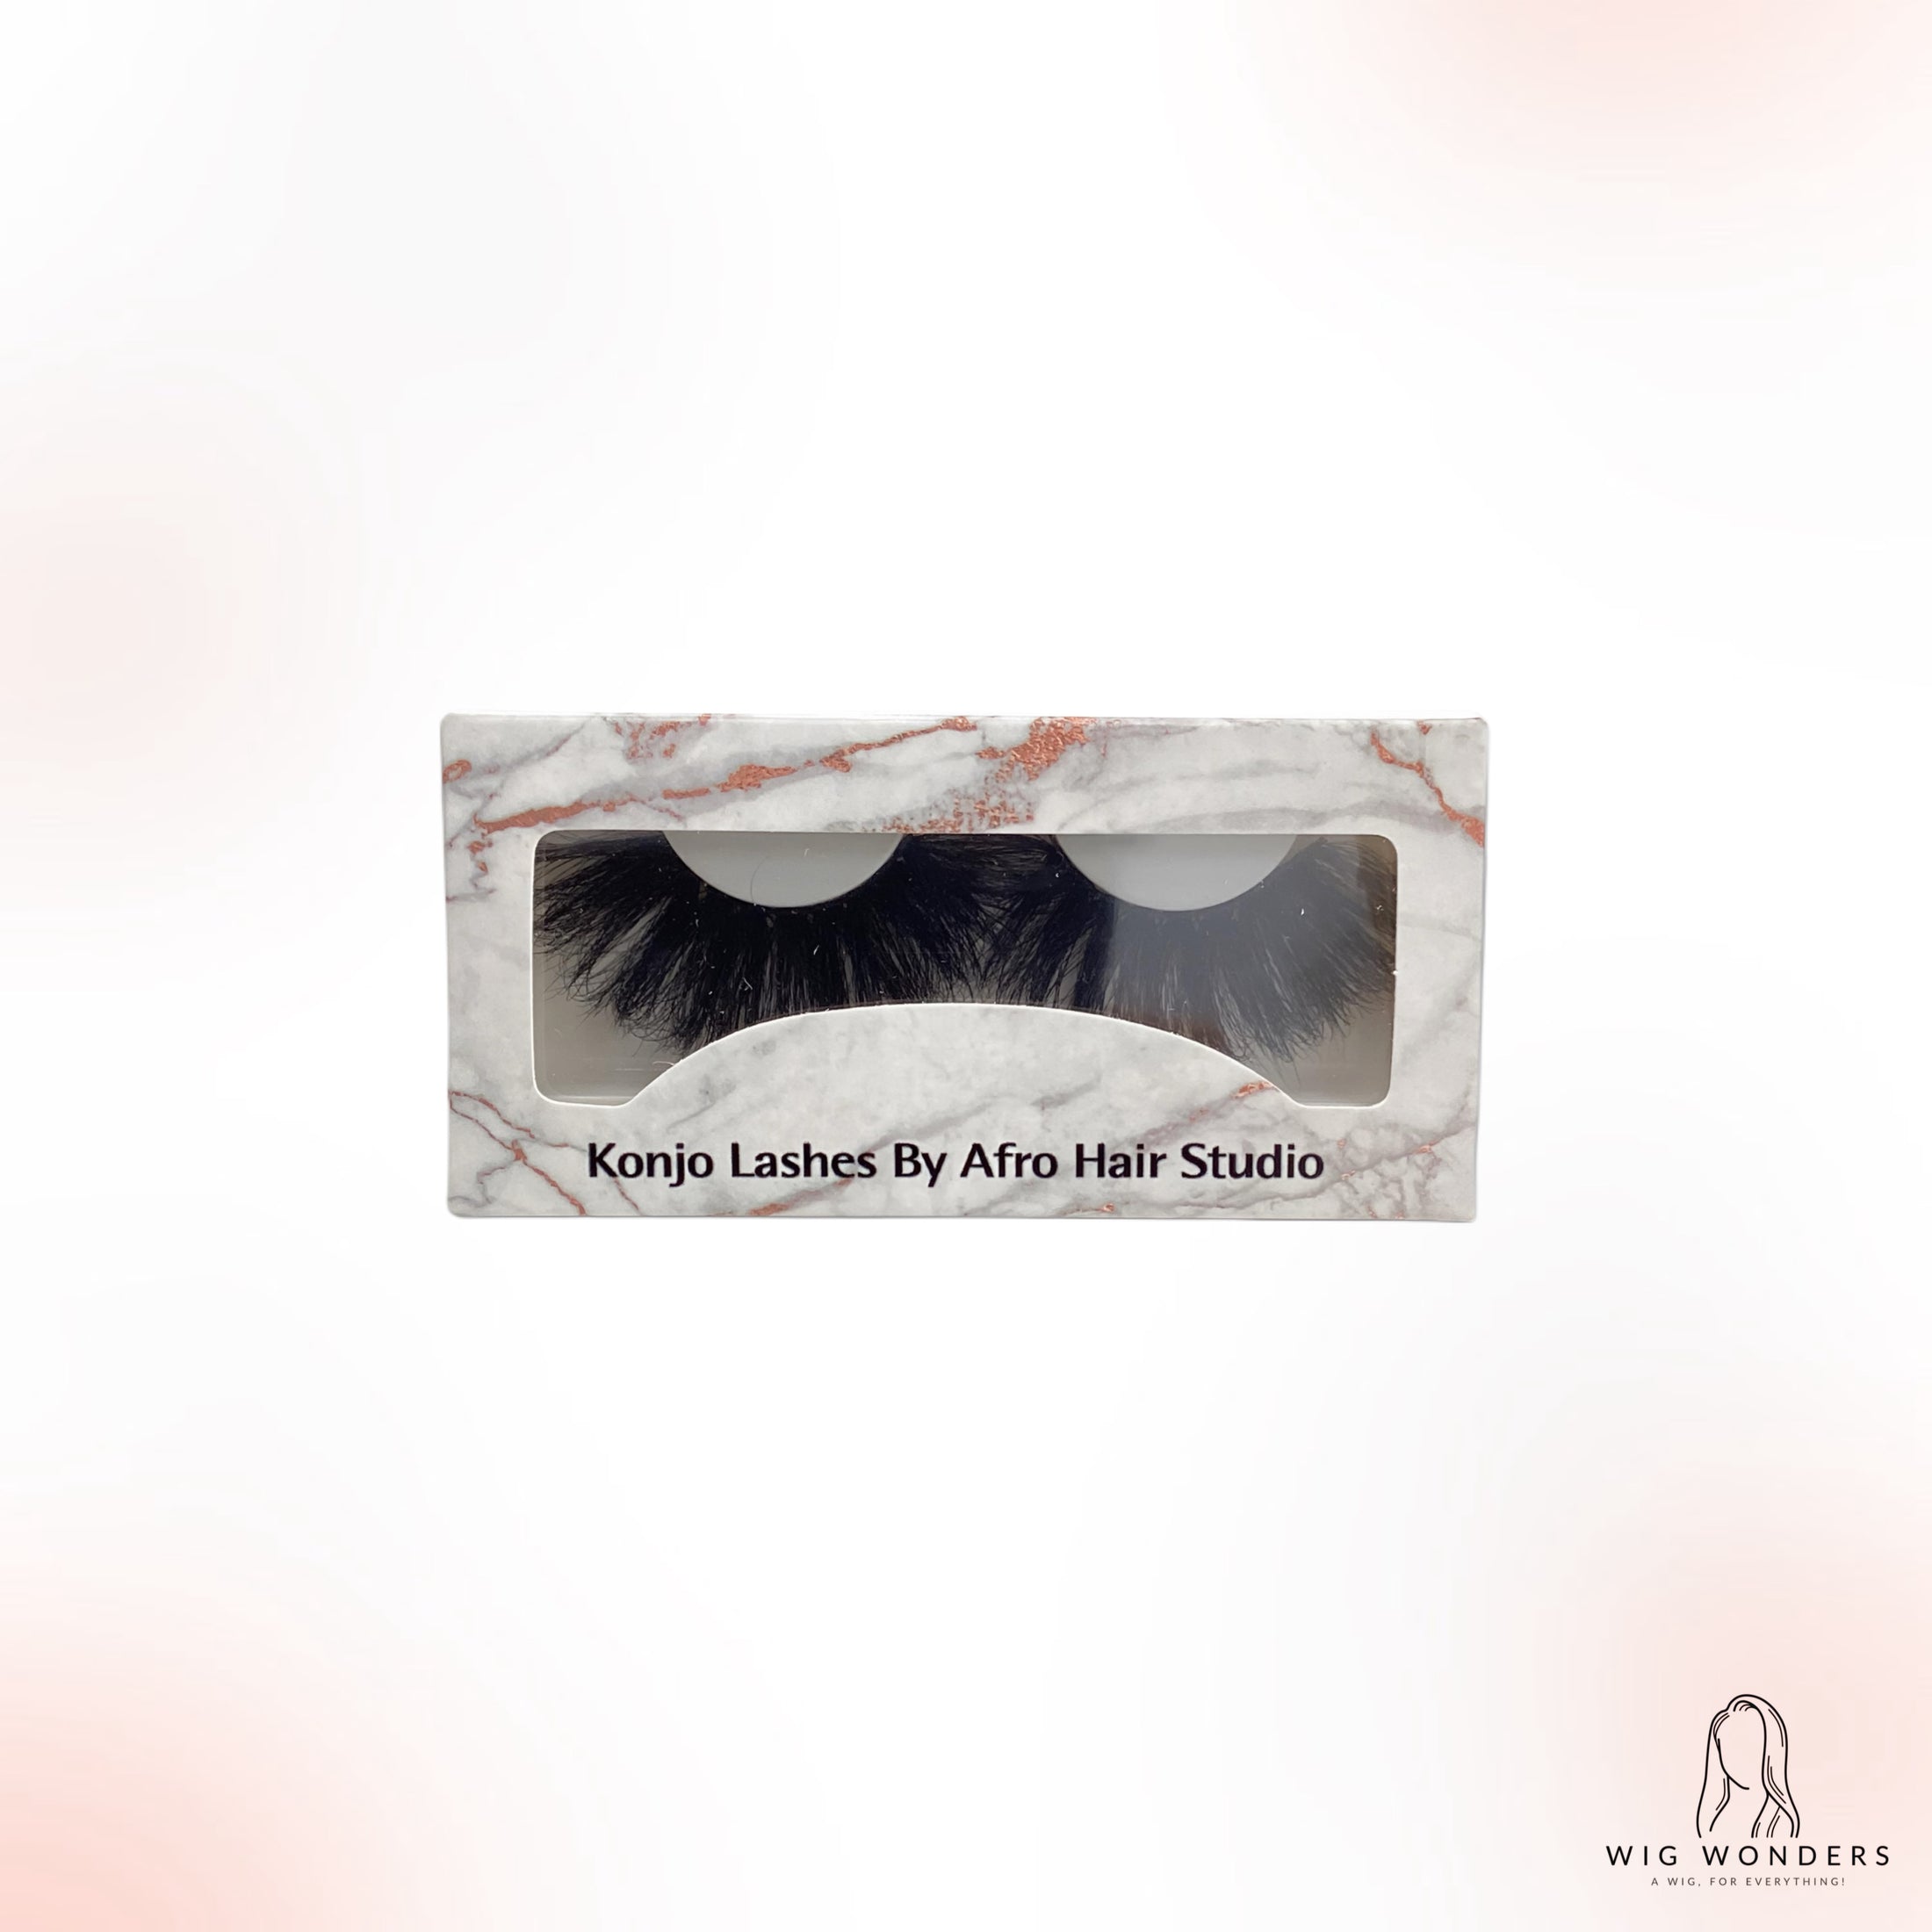 Konjo Lashes by Afro Hair Studio